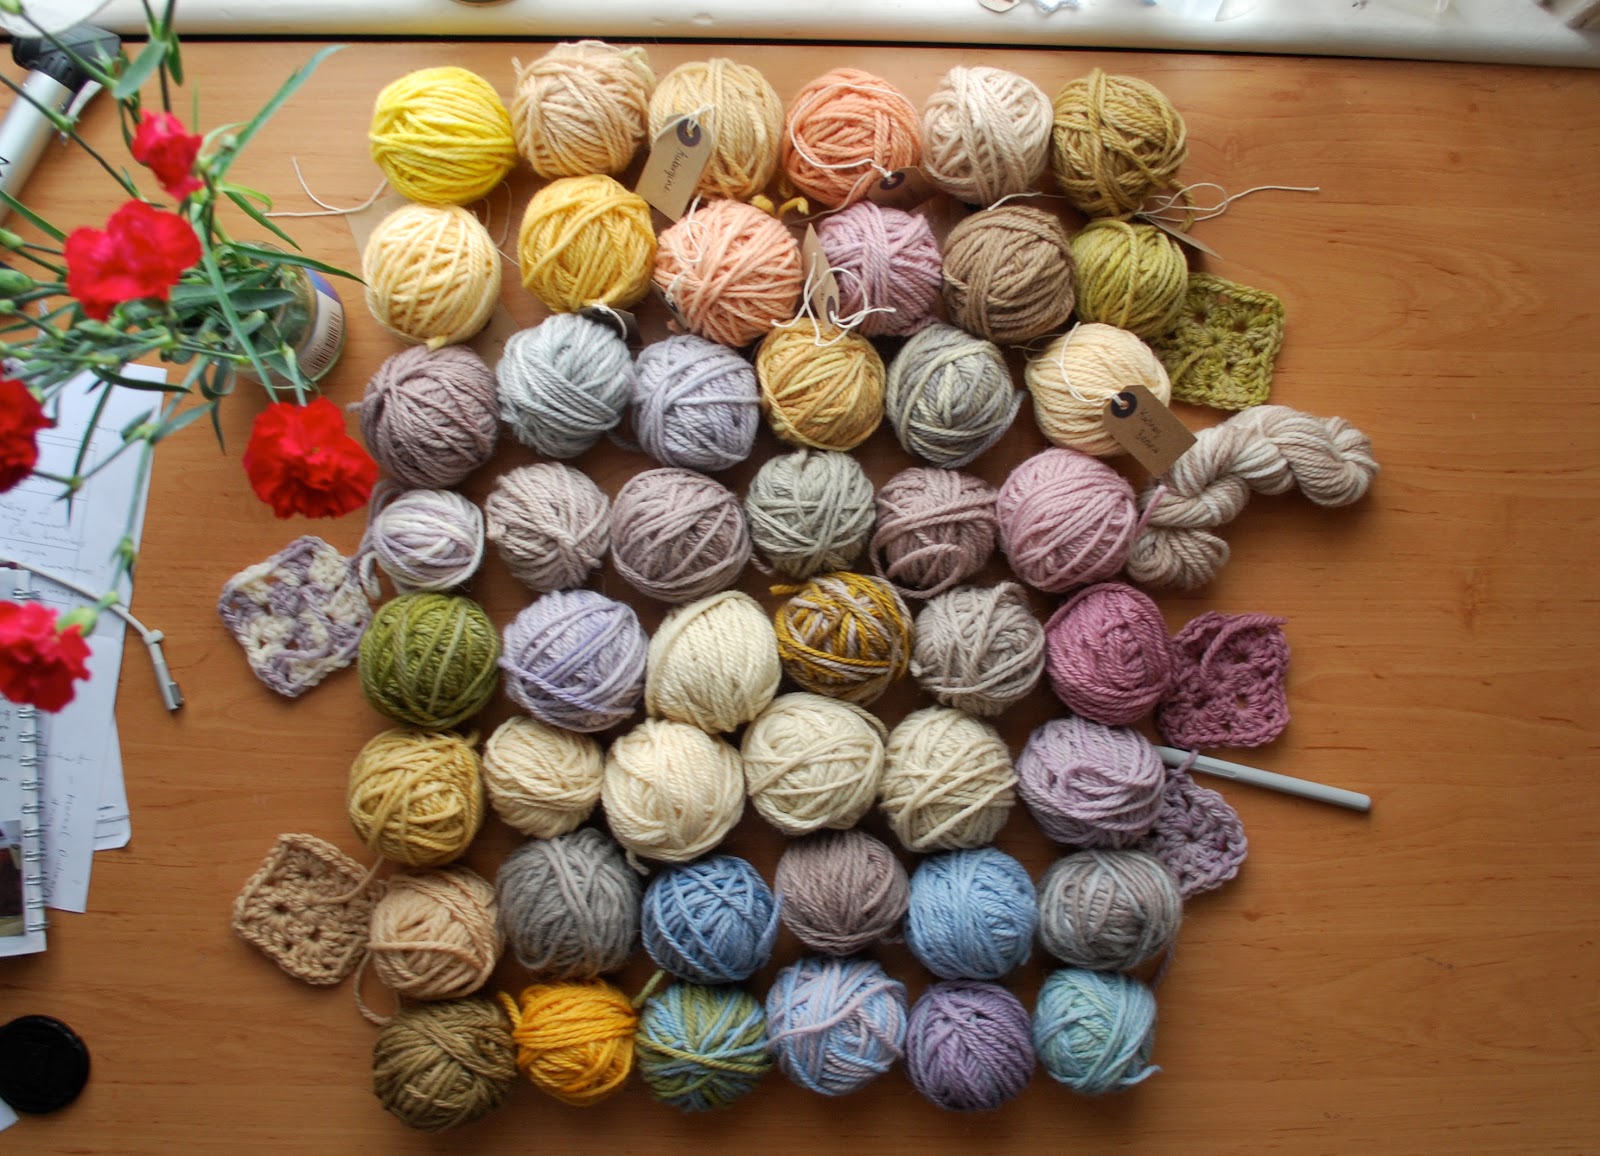 Naturally dyed yarn.